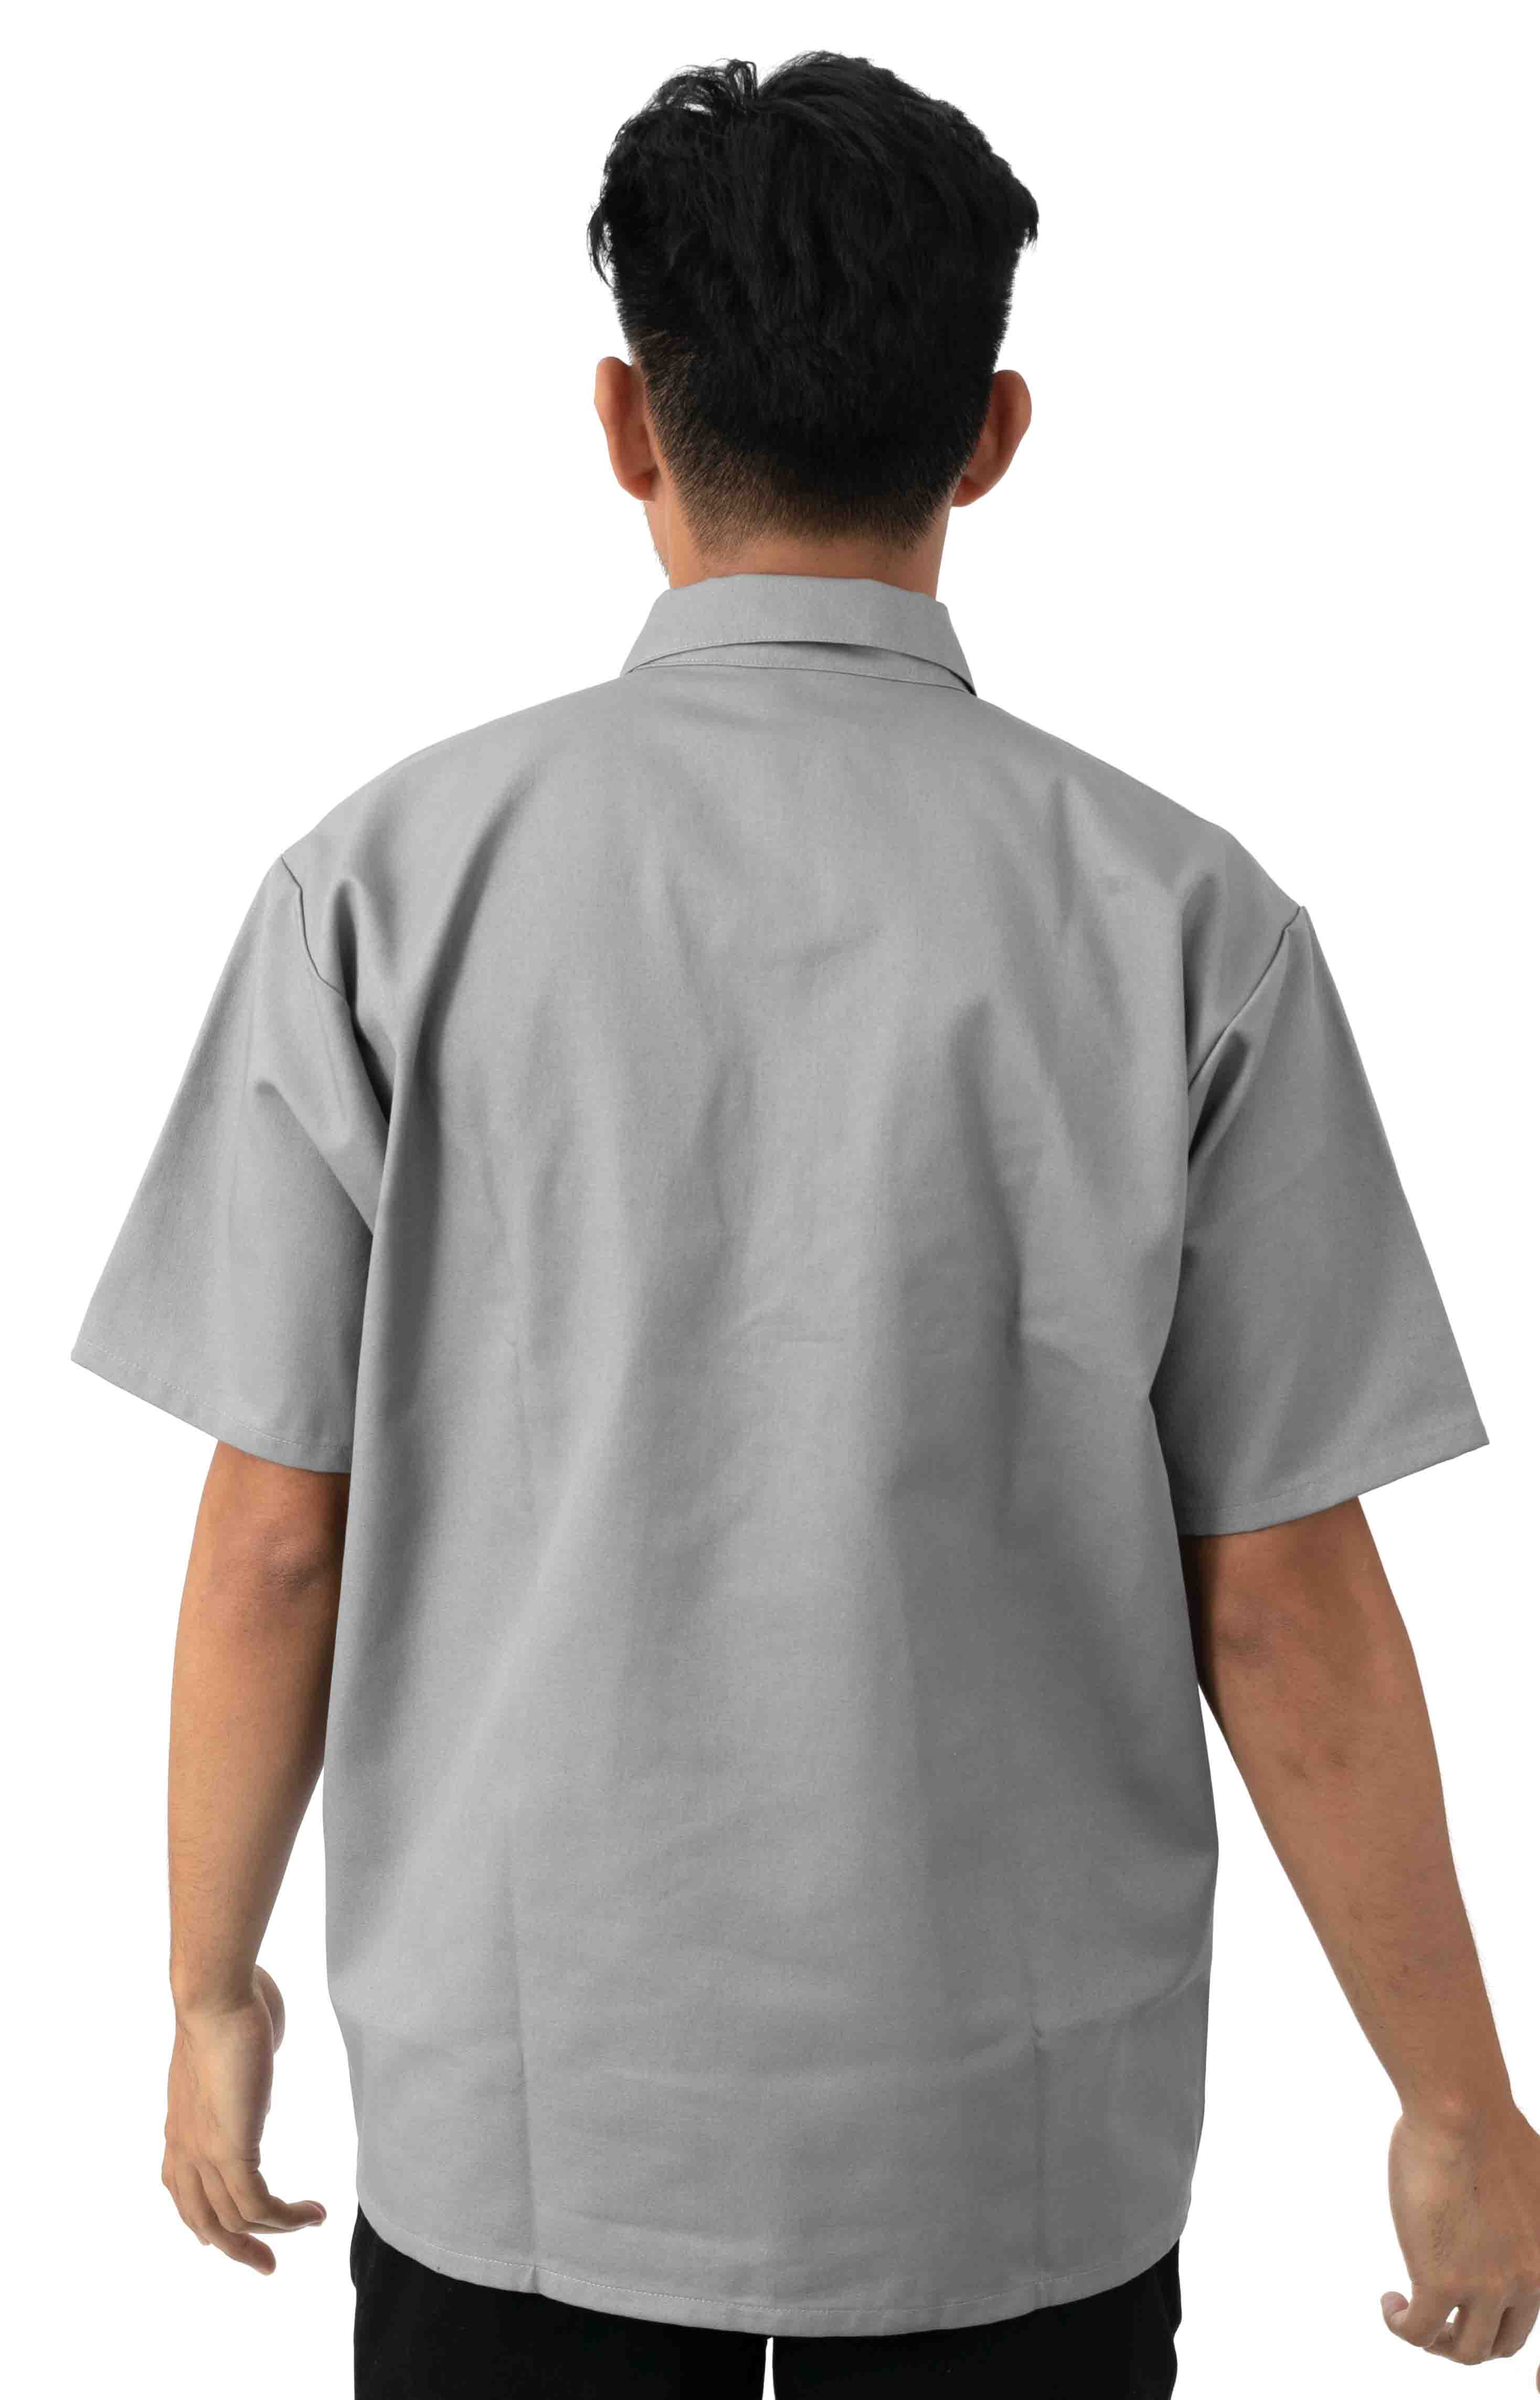 Short Sleeve Solid 1/2 Zip Shirt - Light Grey